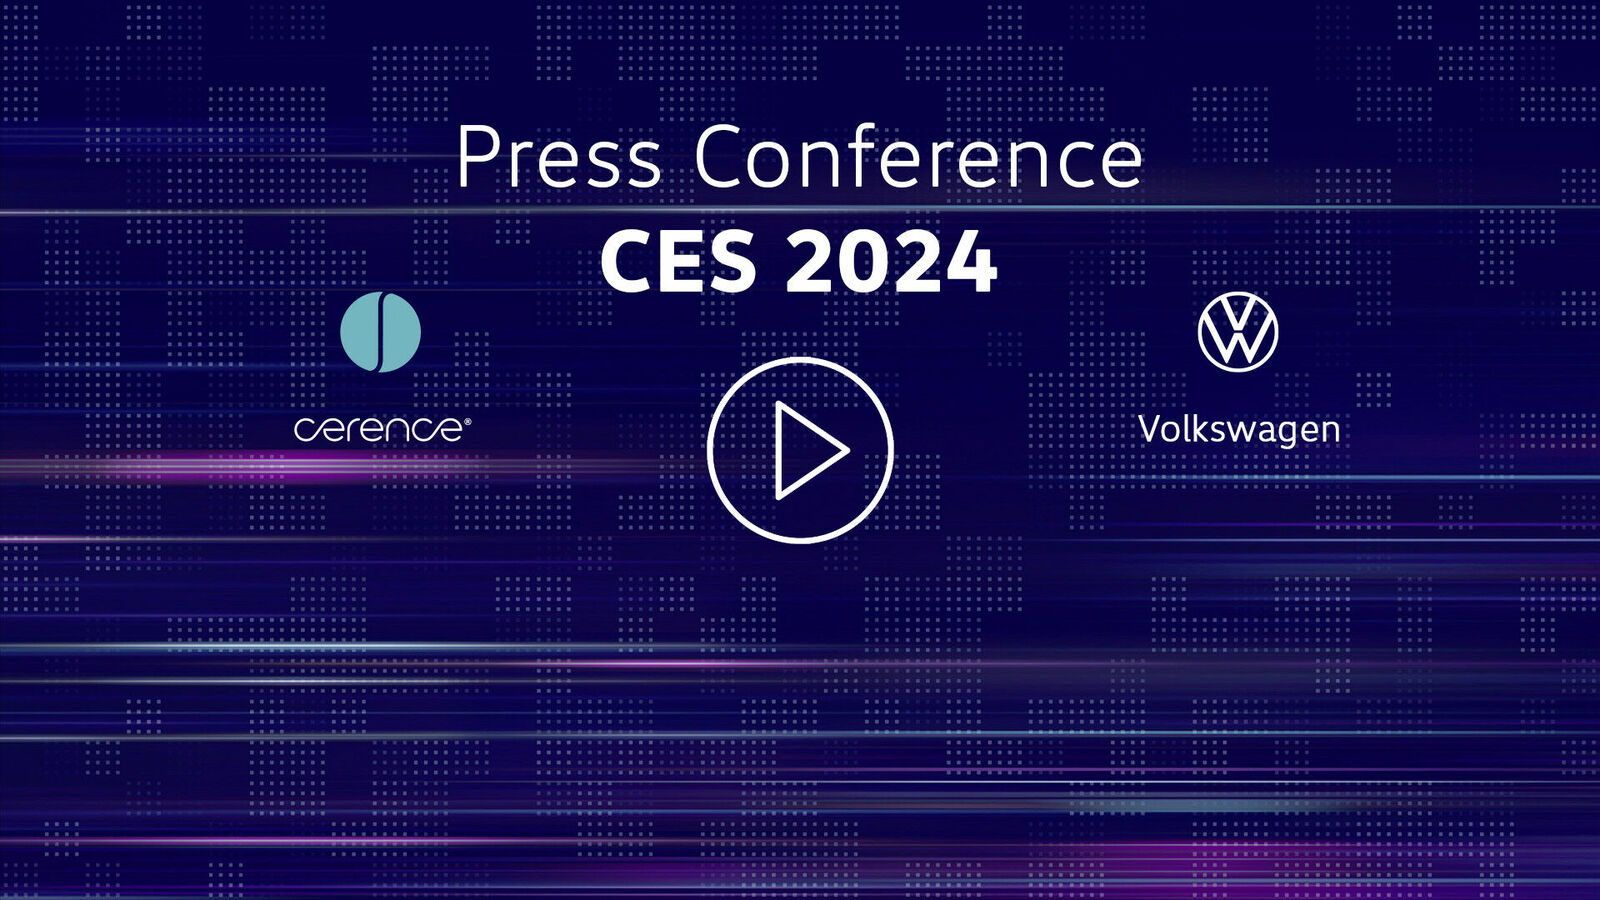 Press Conference CES 2024